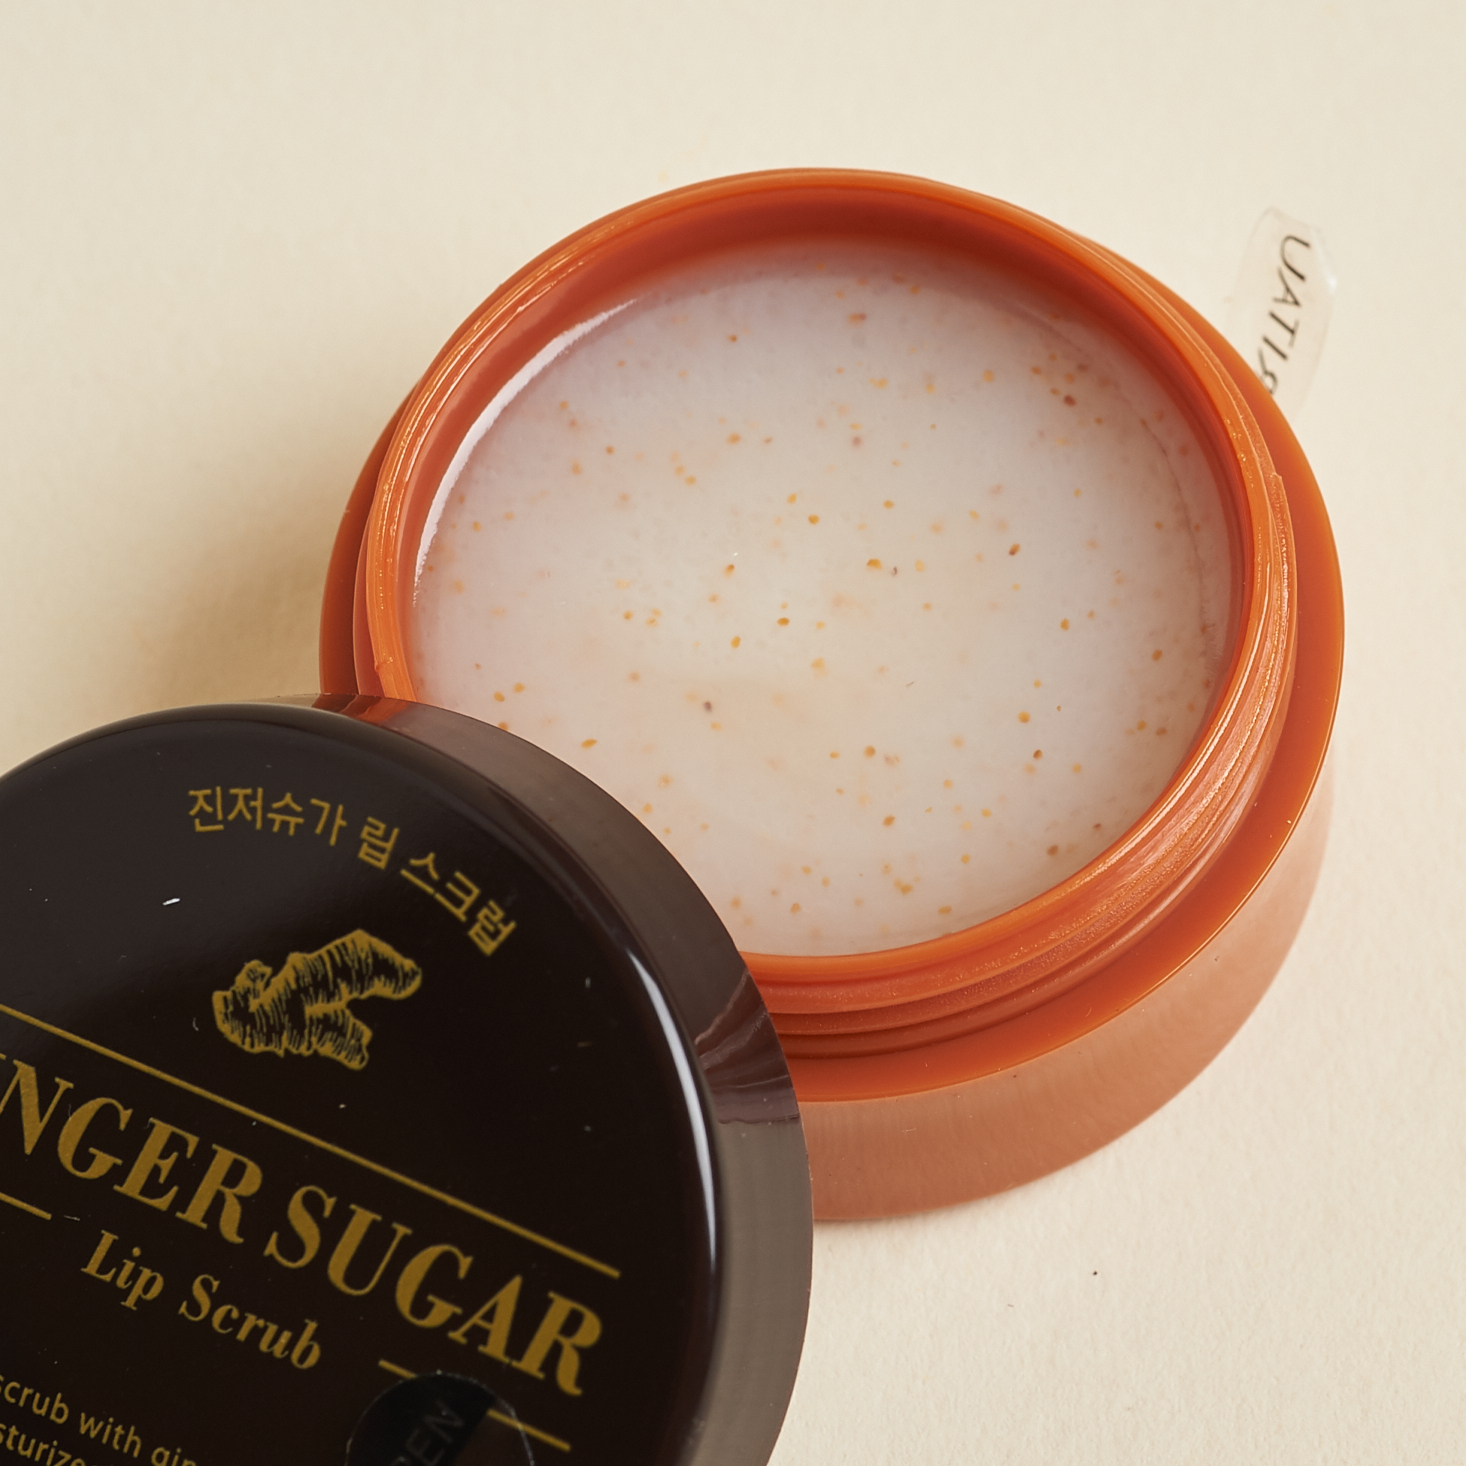 opened Aritaum Ginger Sugar Lip Scrub with lid off